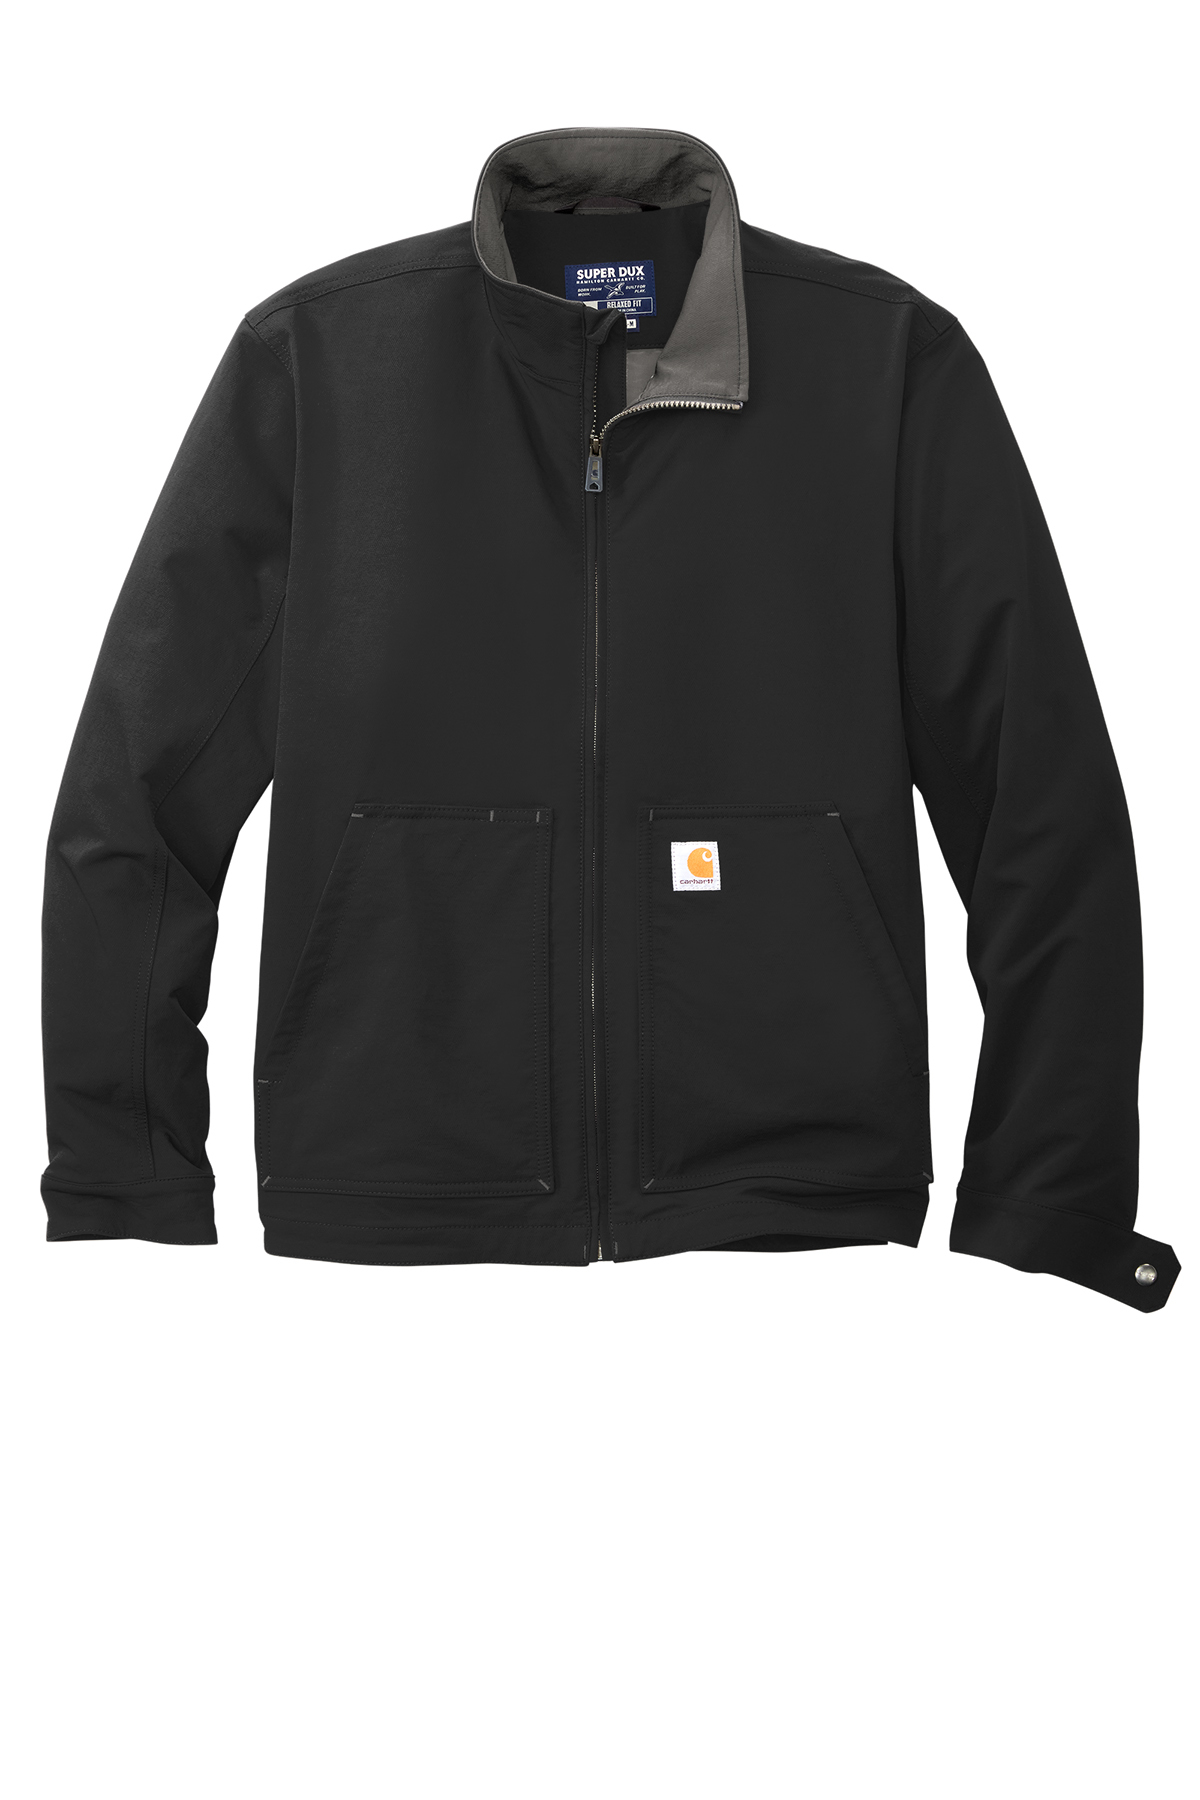 Carhartt Super Dux Soft Shell Jacket | Product | Company Casuals